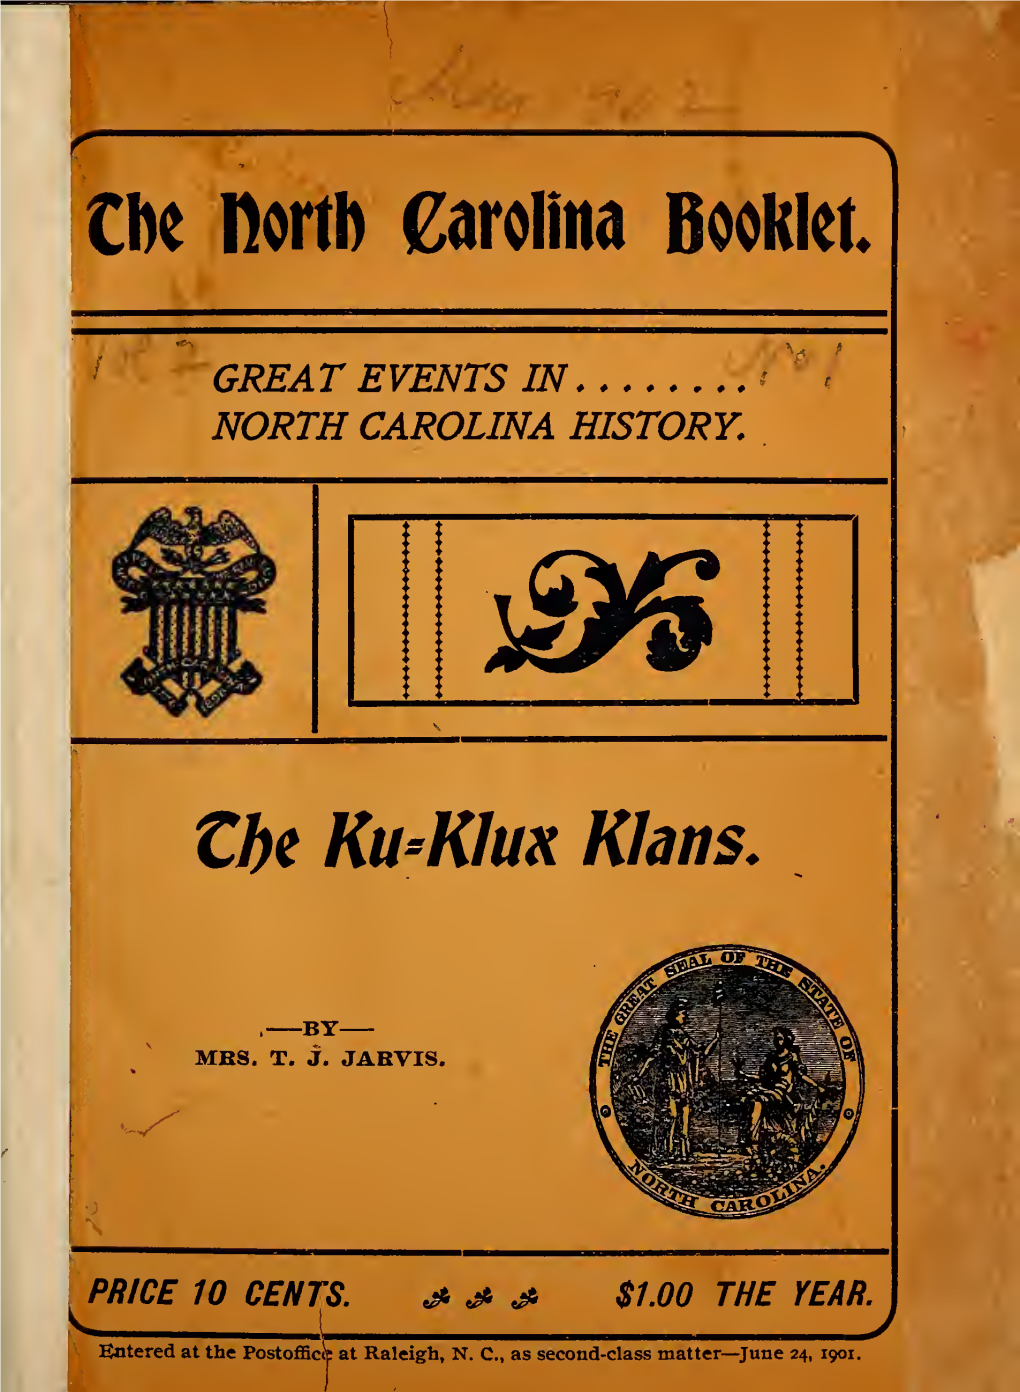 The North Carolina Booklet